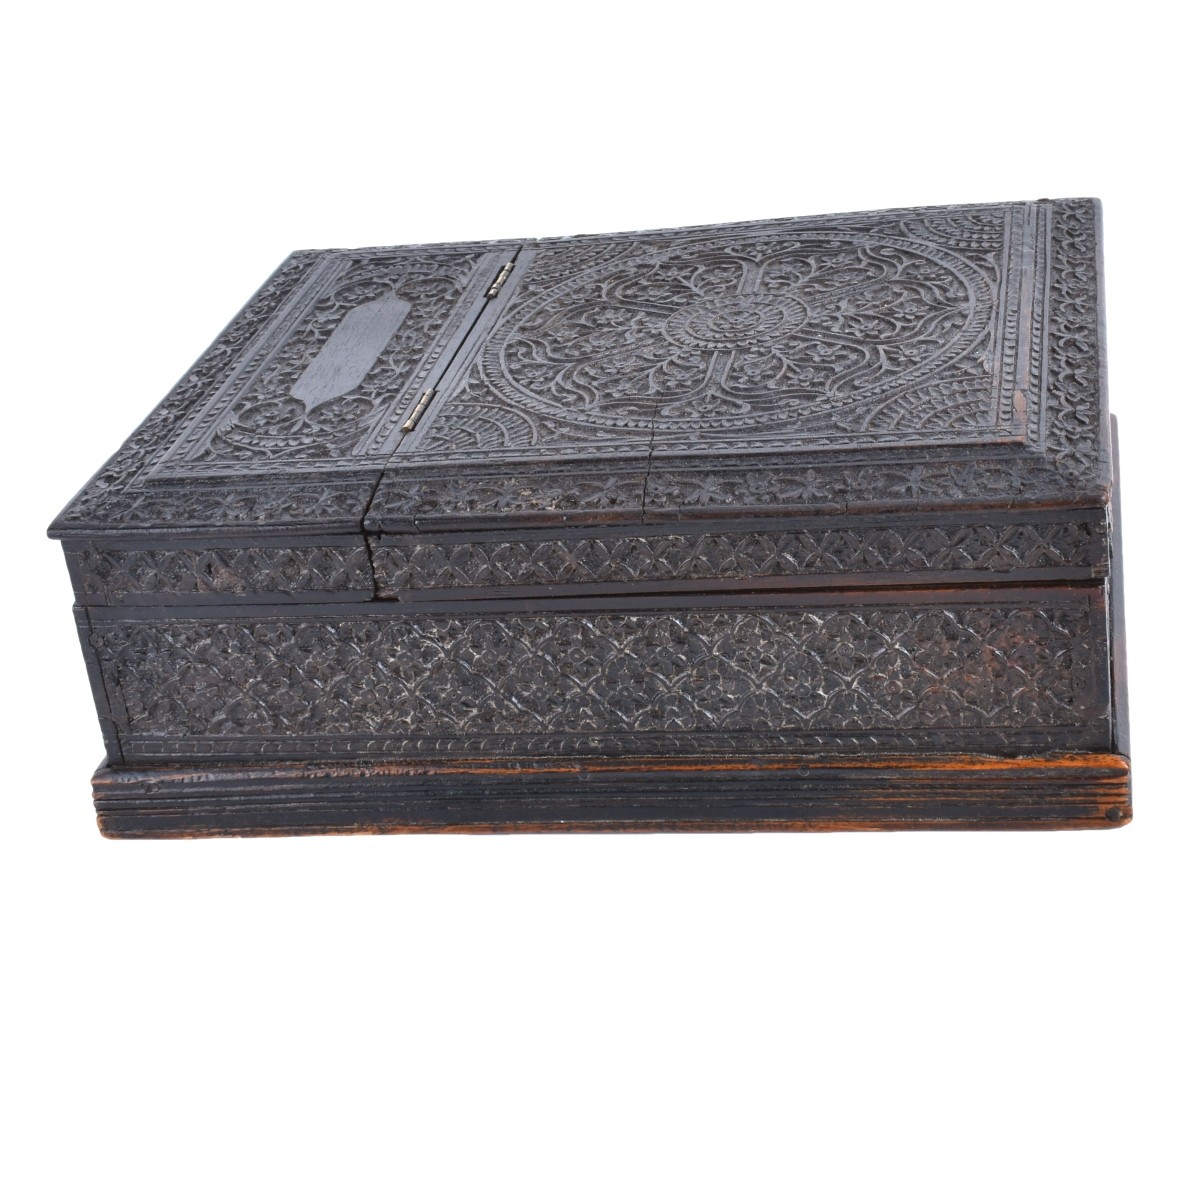 Antique Moroccan Box